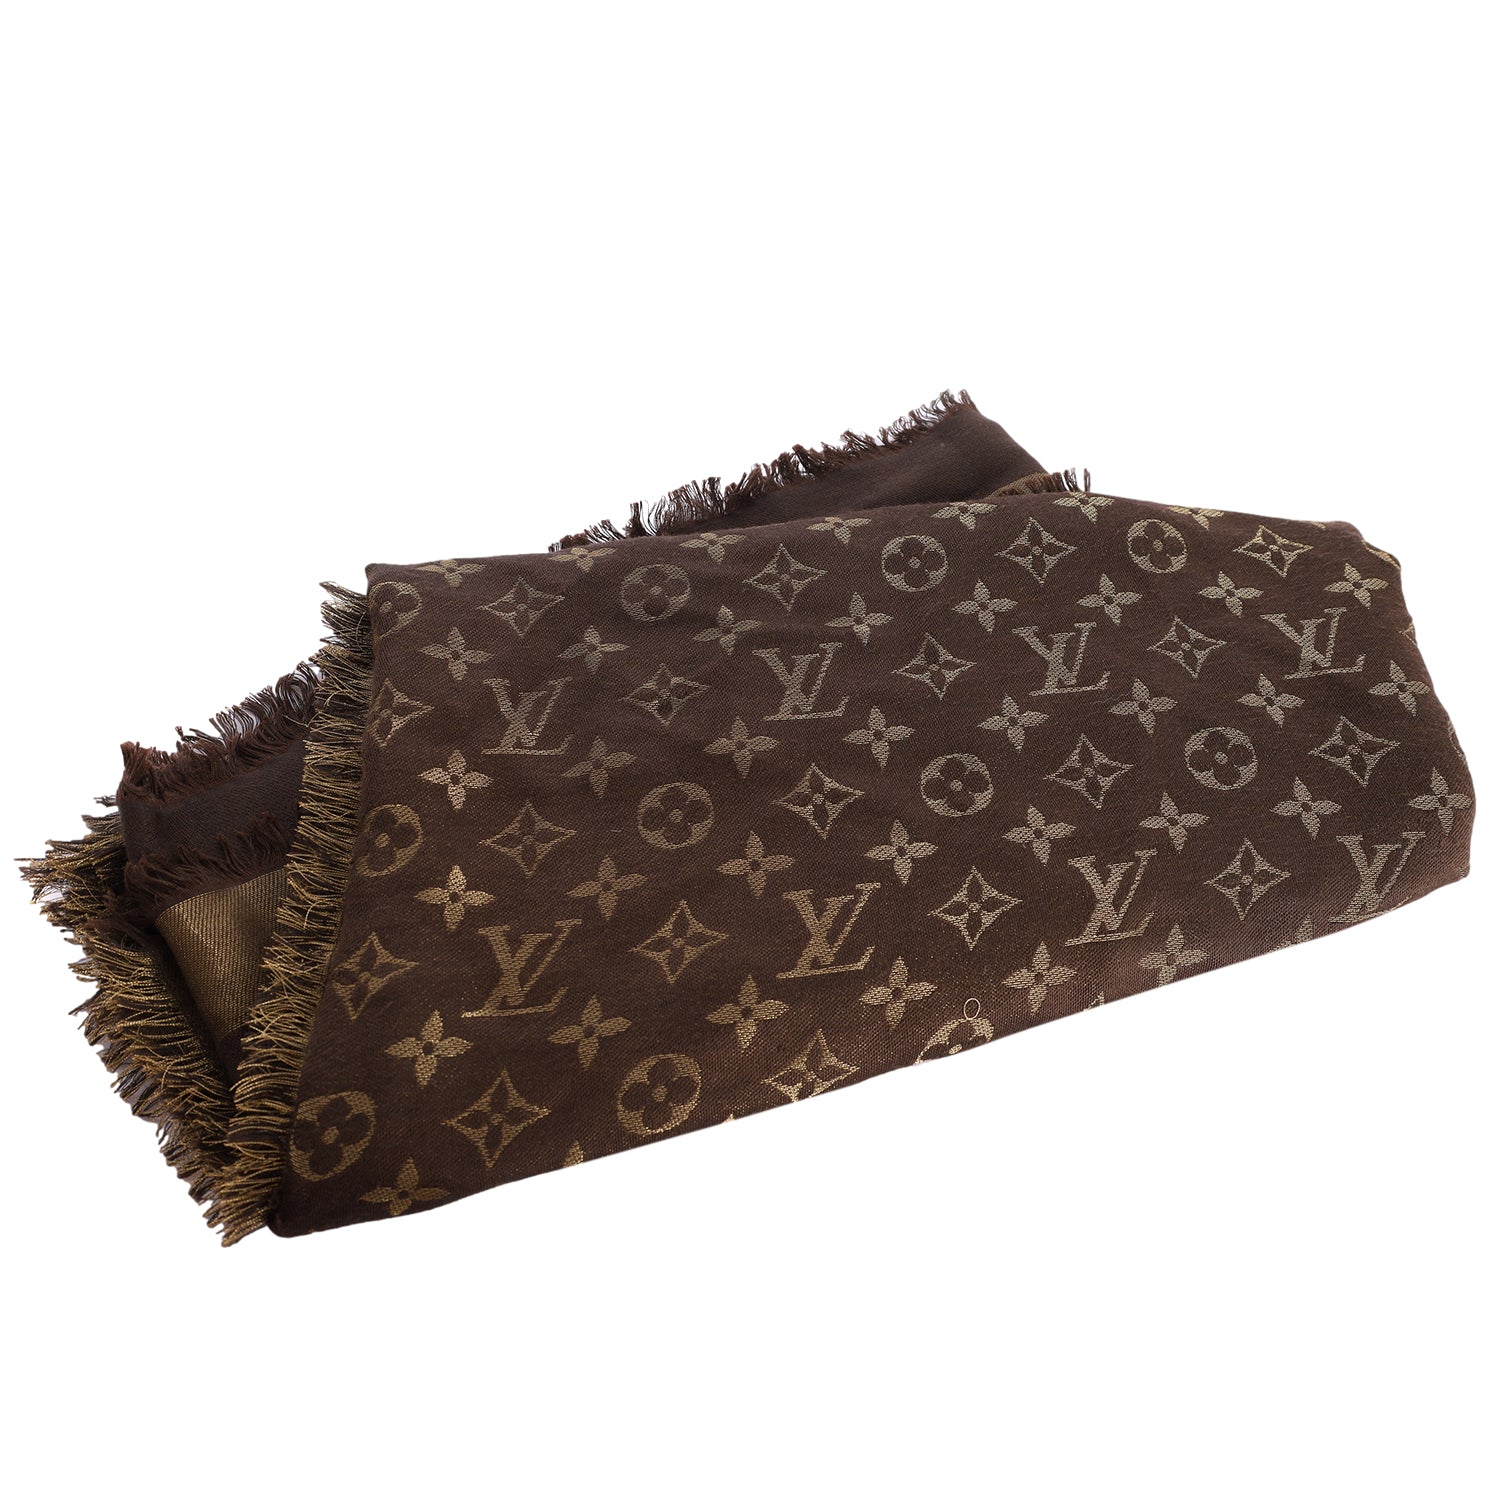 New Authentic Louis Vuitton Wrap/scarf